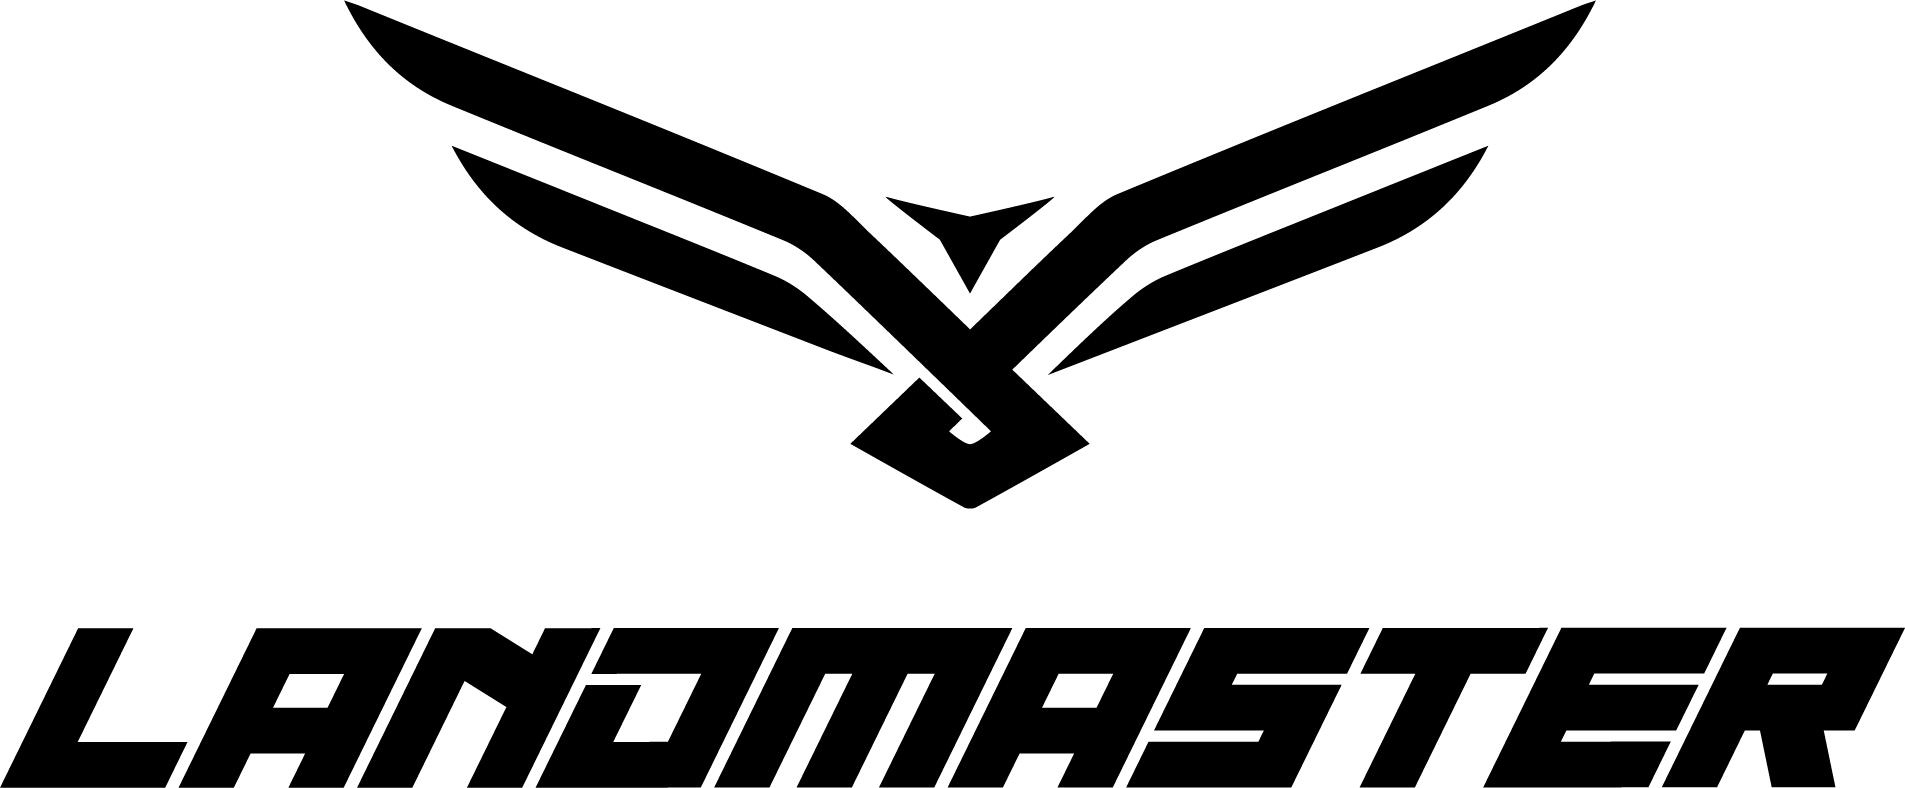 secondary-logo-black